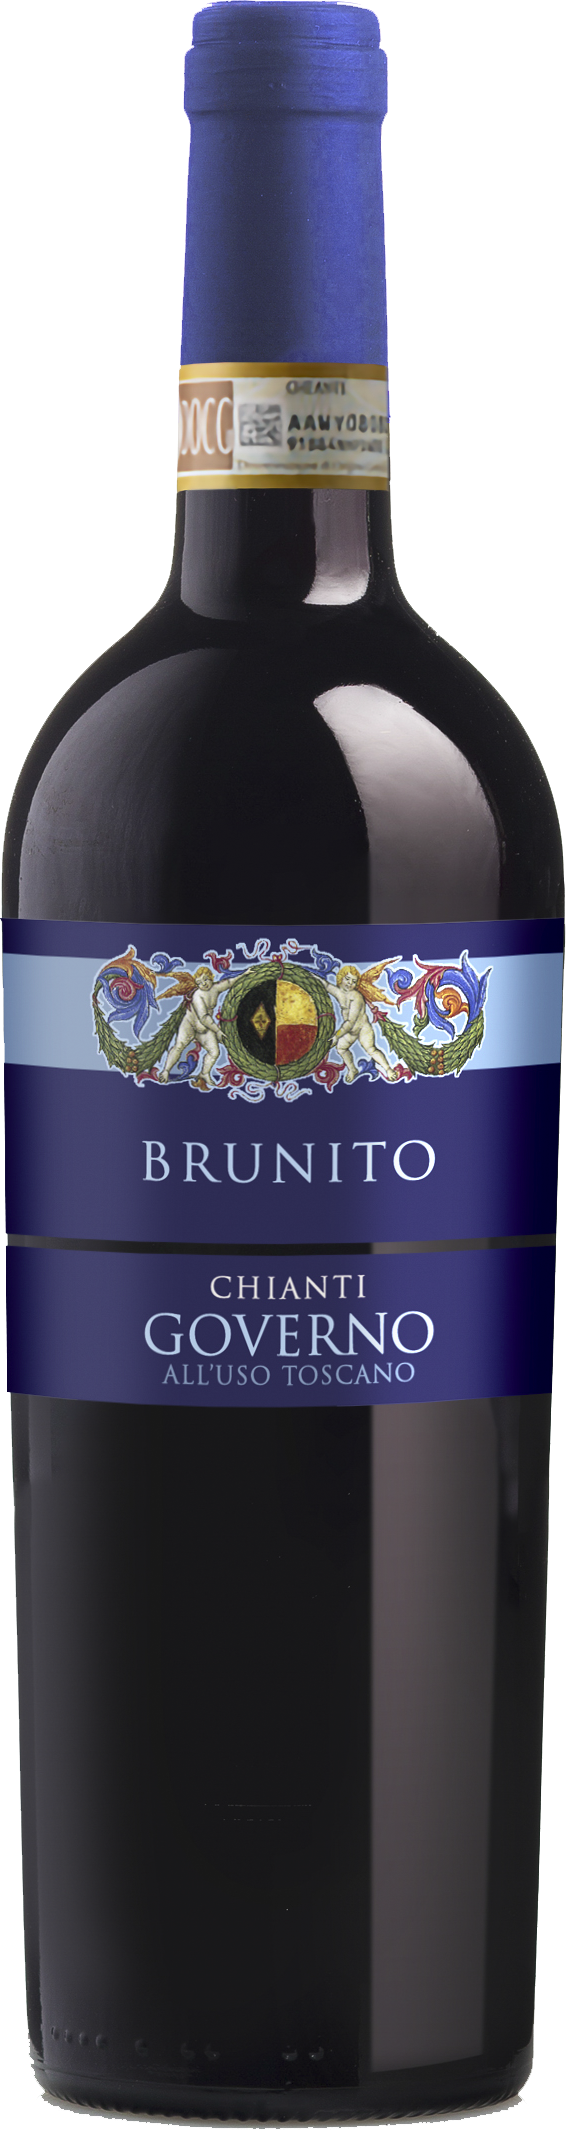 Brunito-Chianti-Governo2dgP5XUYKITW1